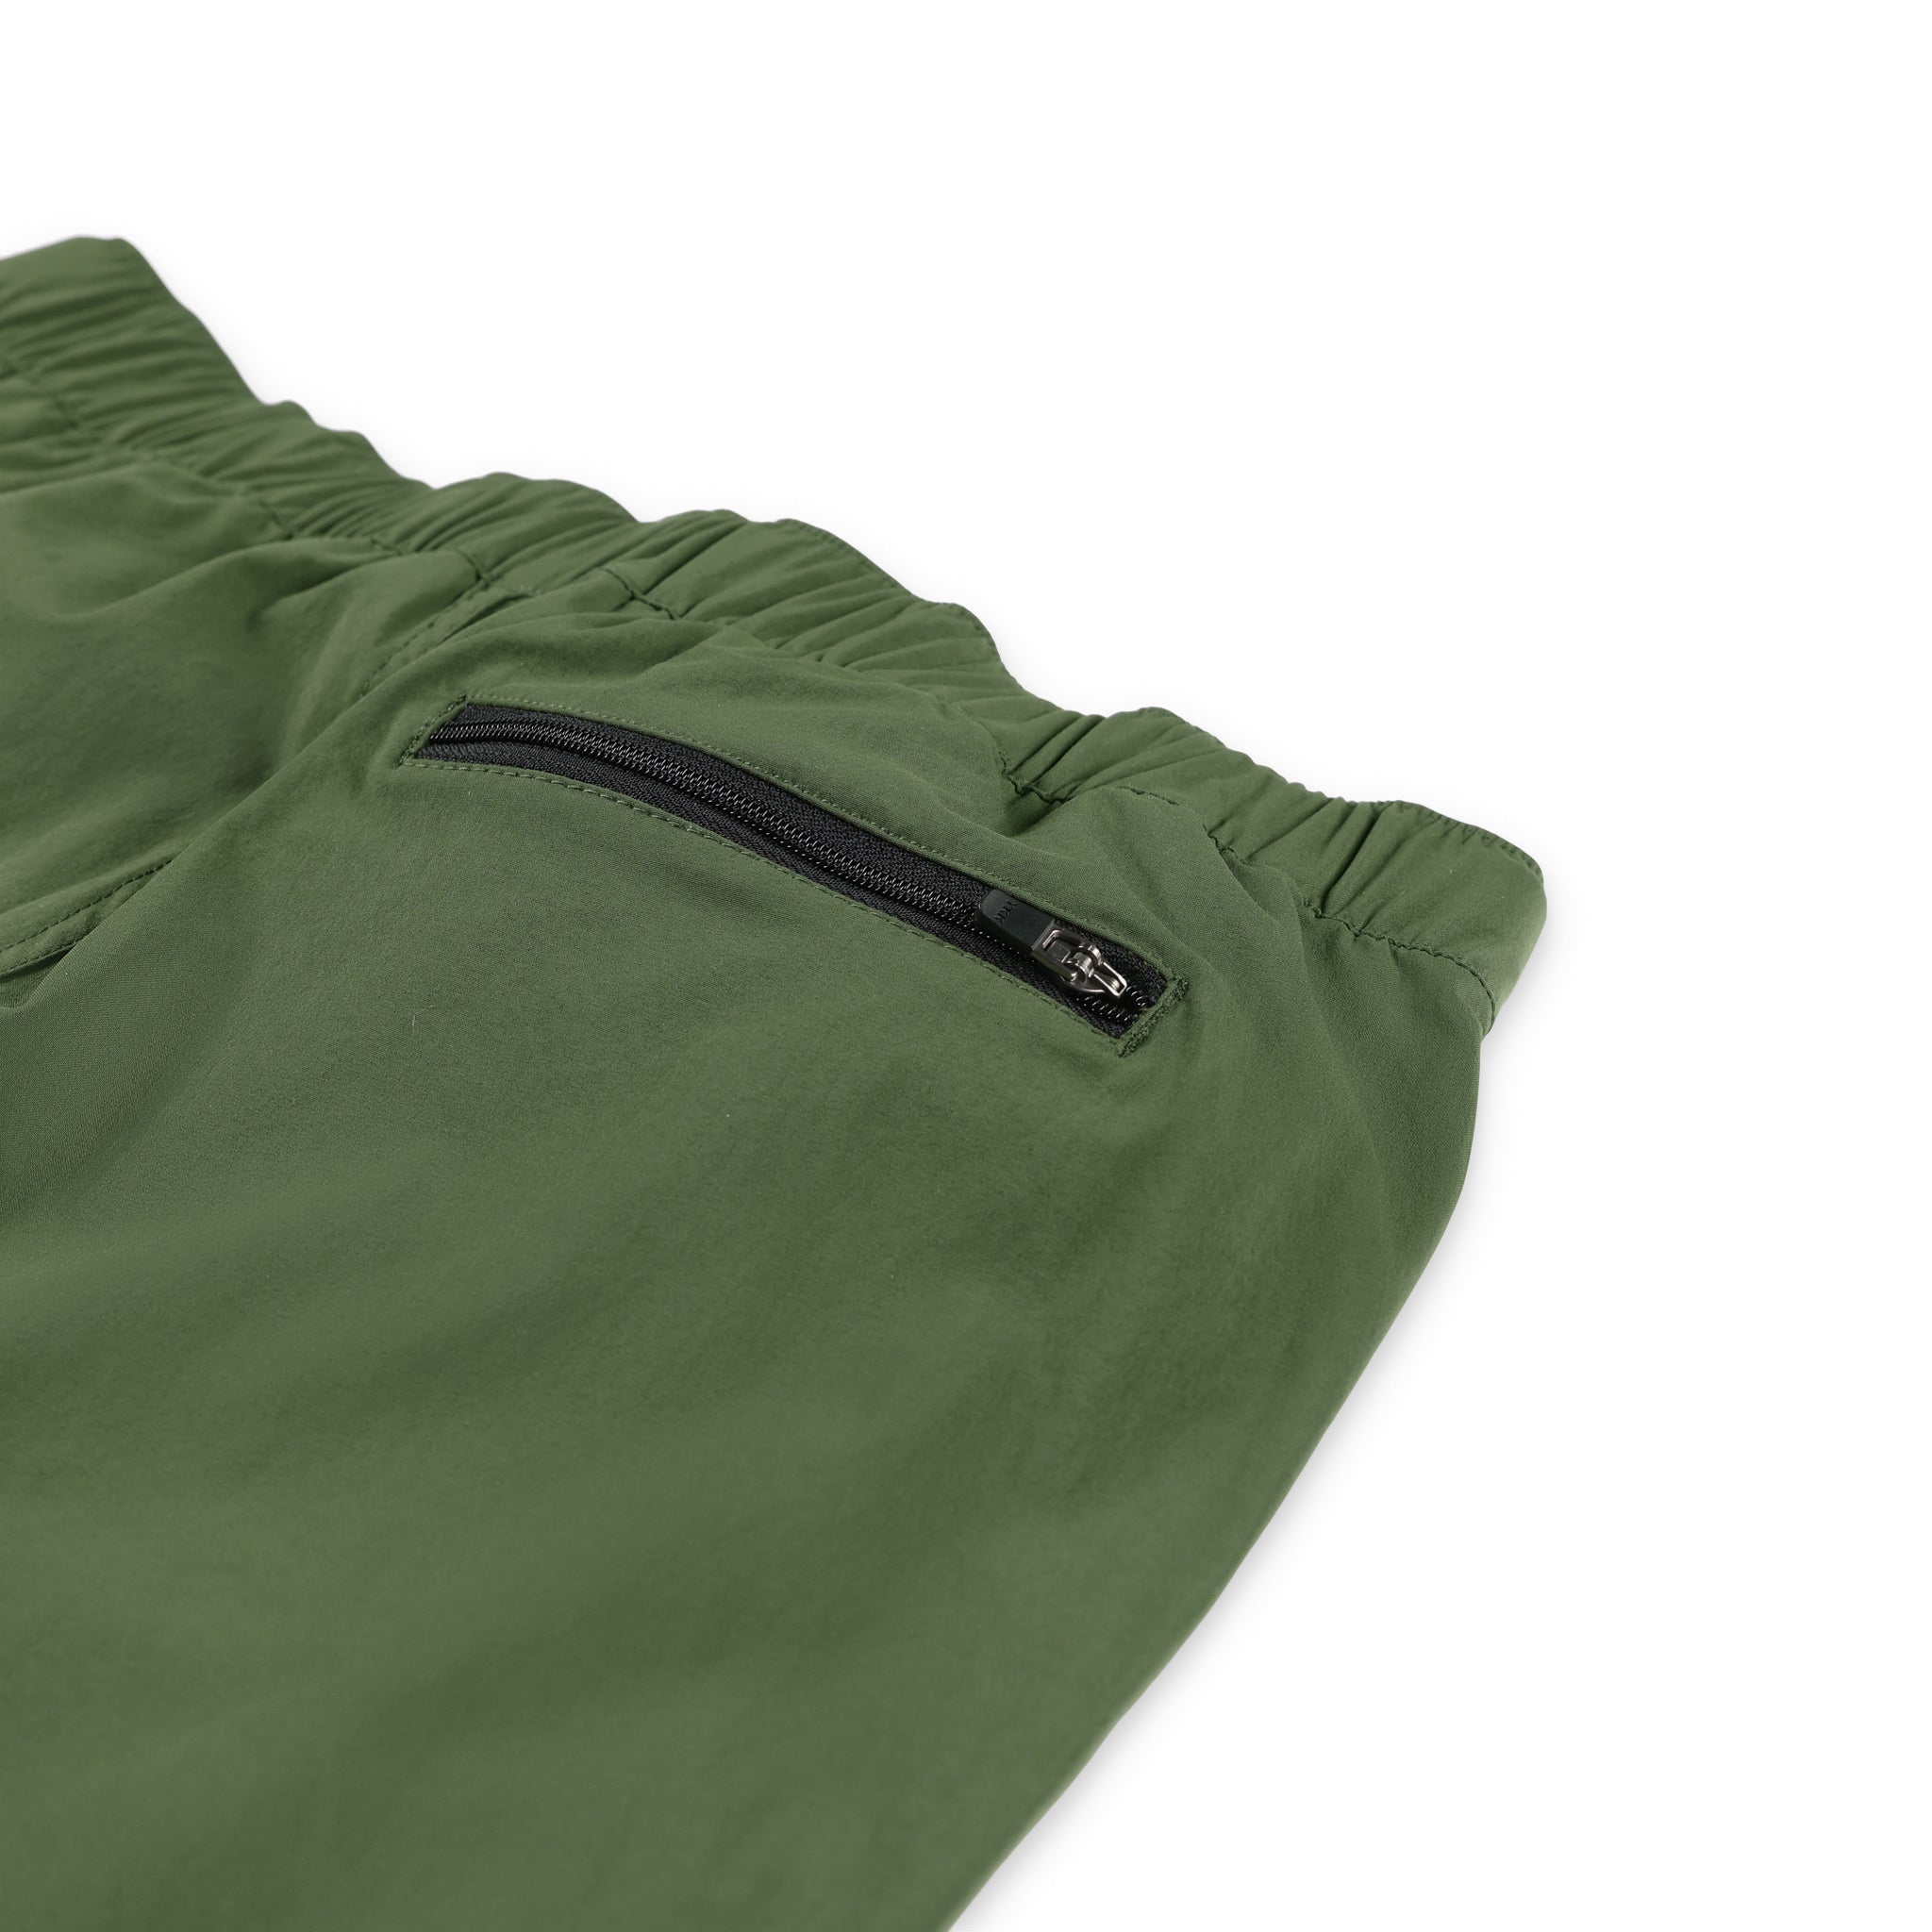 General shot of back zipper pocket on Topo Designs Men's River quick-dry swim Shorts in olive green.